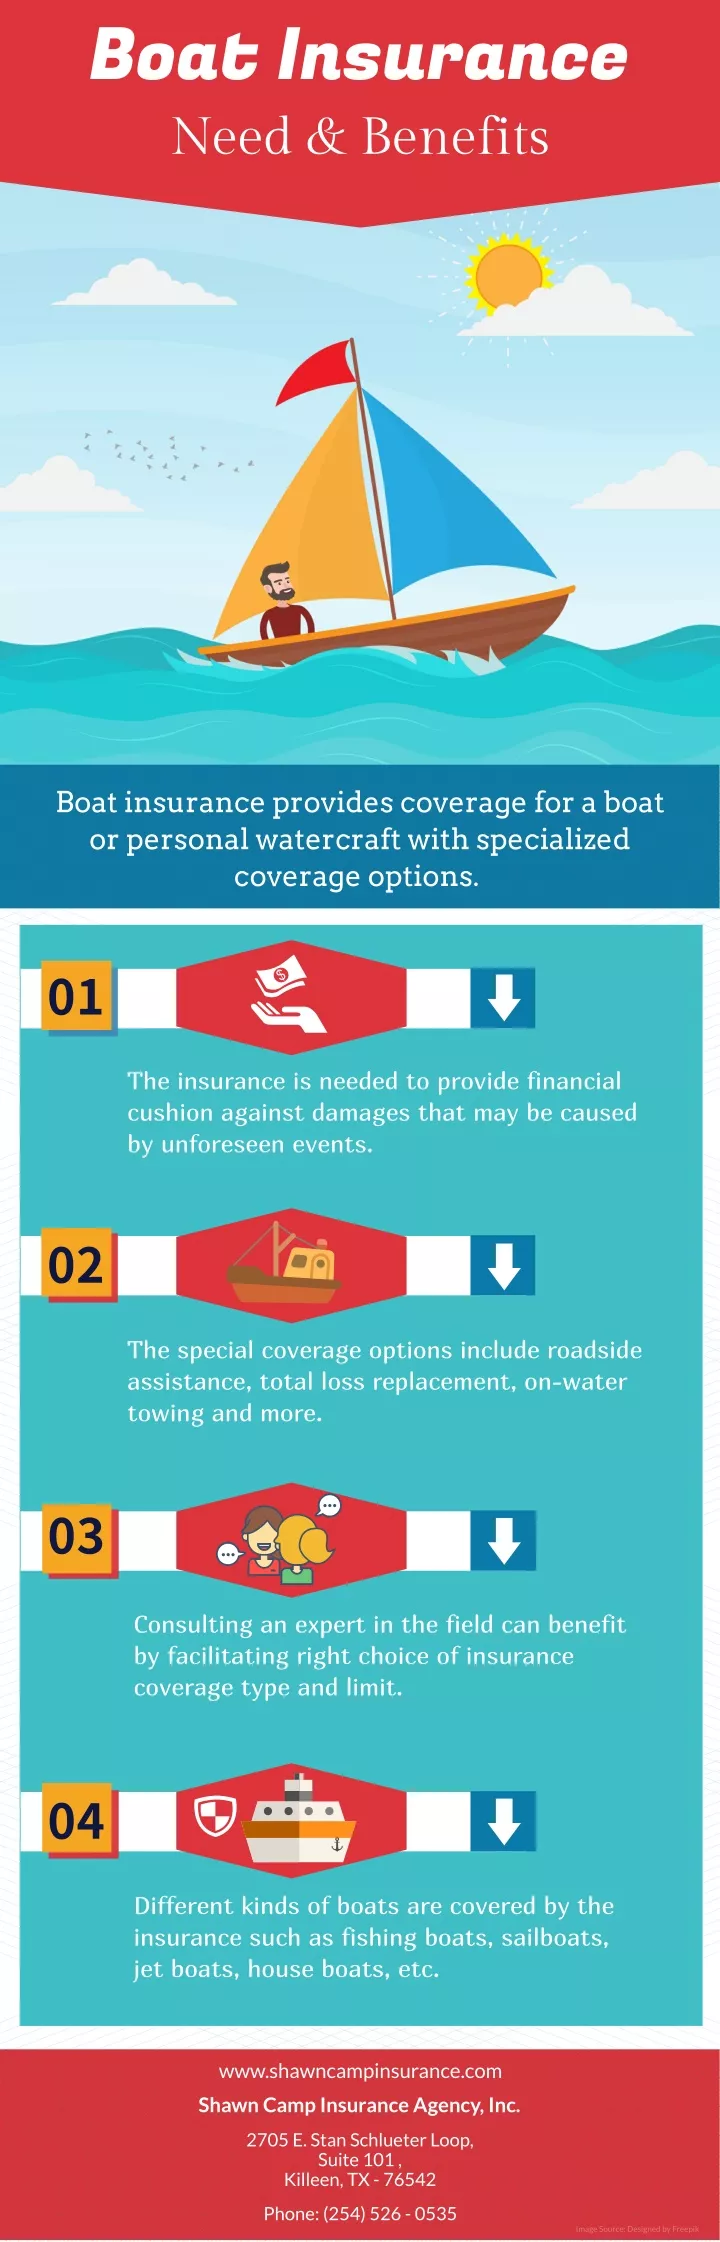 boat insurance need benefits